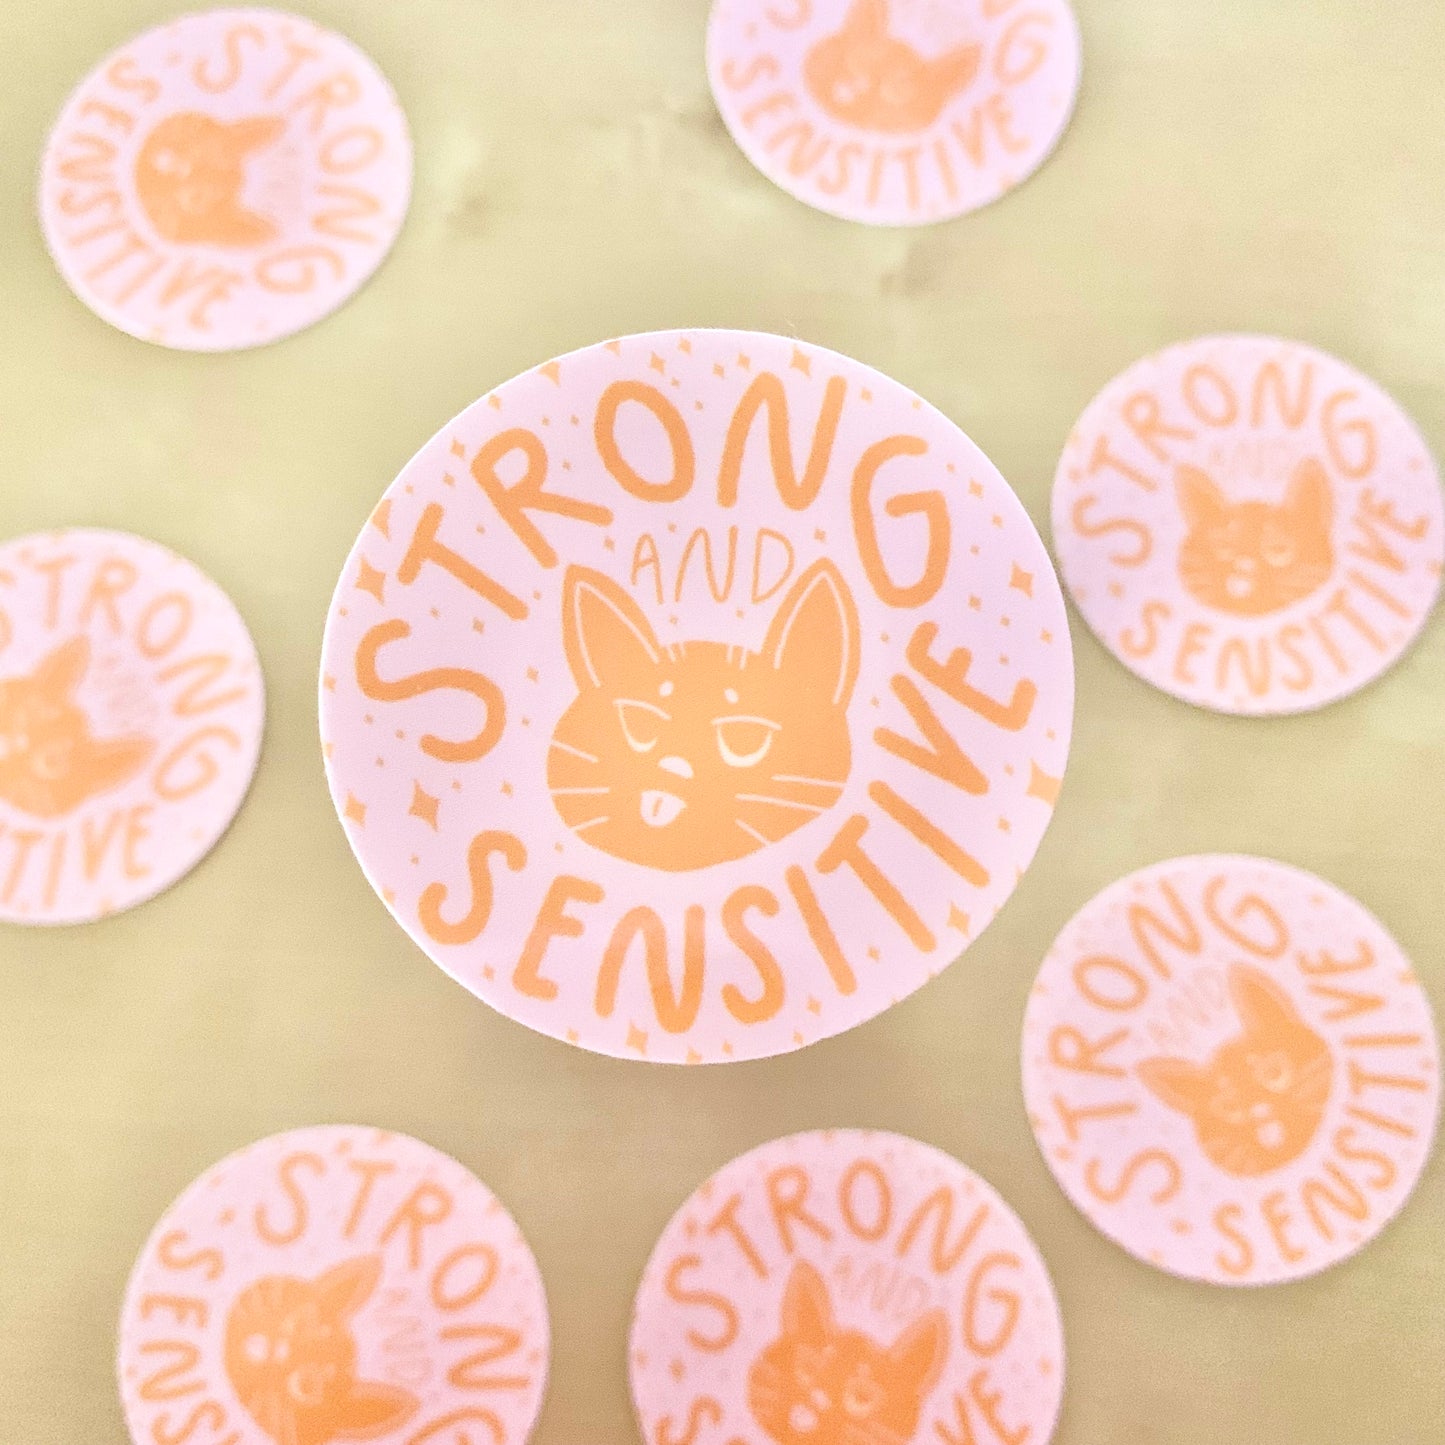 Strong & Sensitive Cat 8x8" Art Print